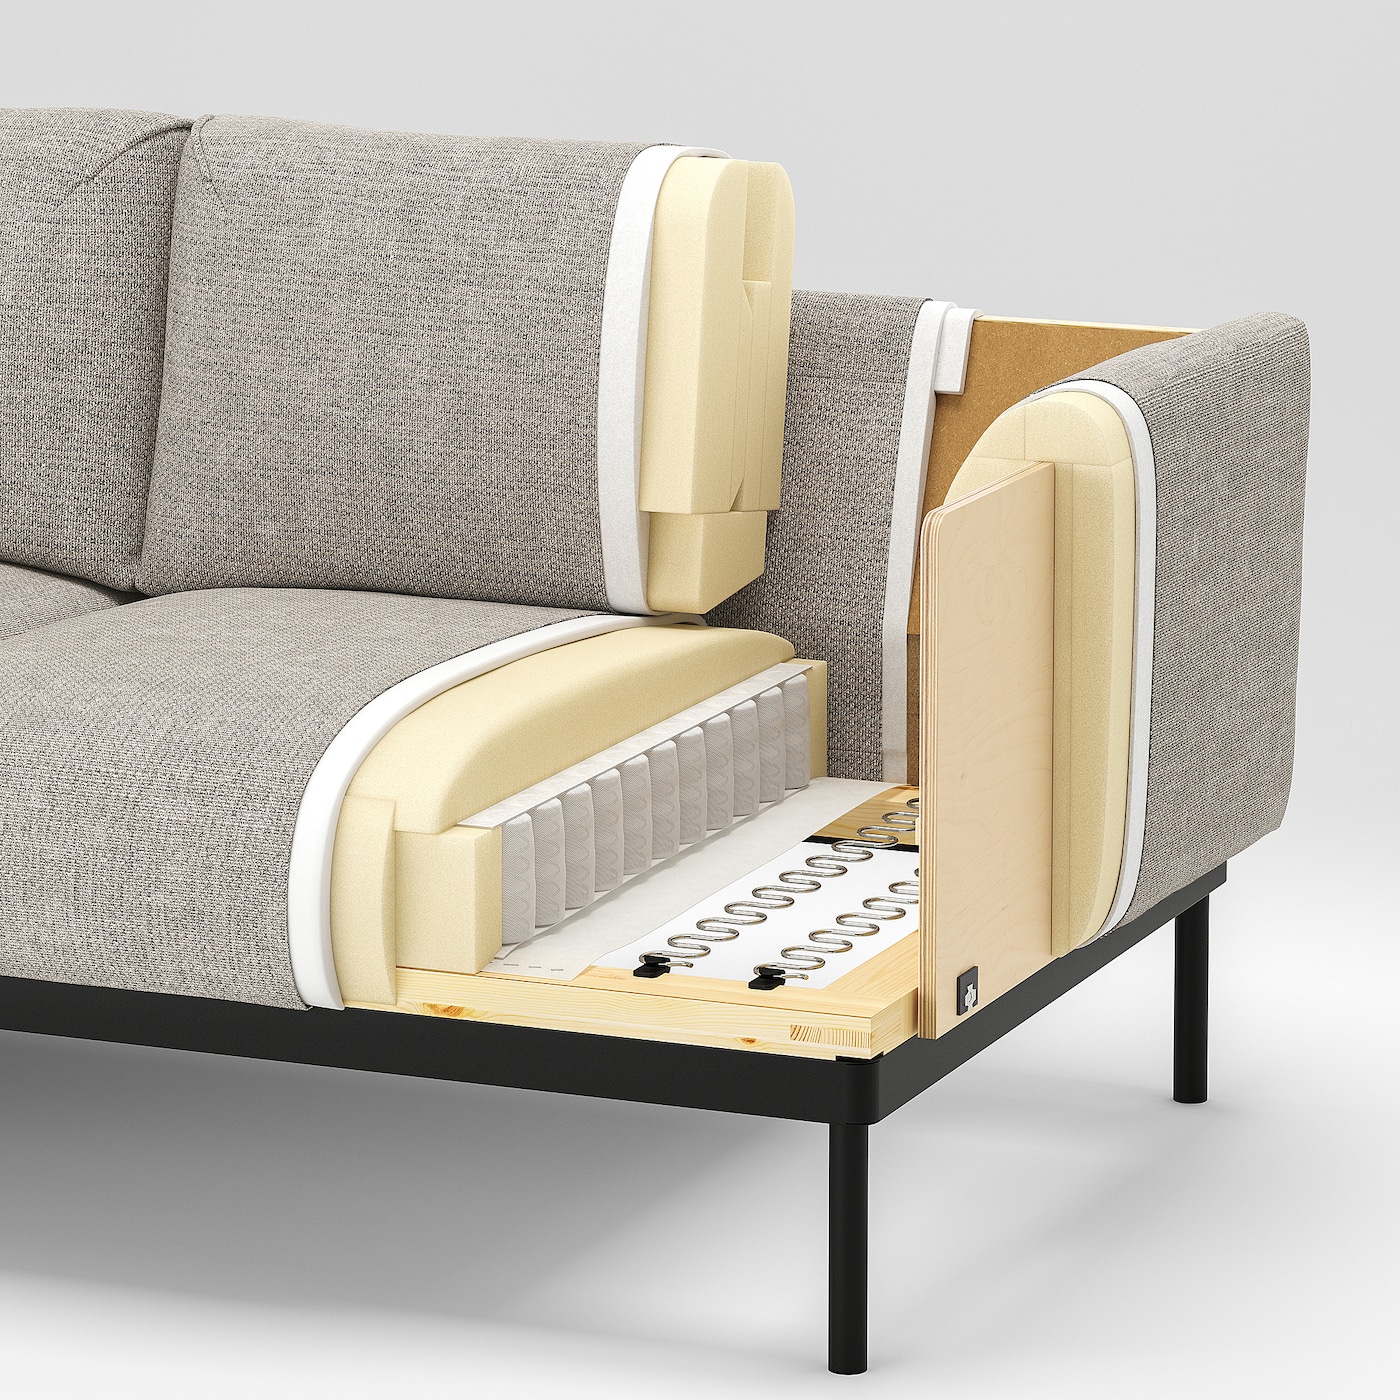 ÄPPLARYD 3-seat sofa with chaise longue Lejde light grey - IKEA